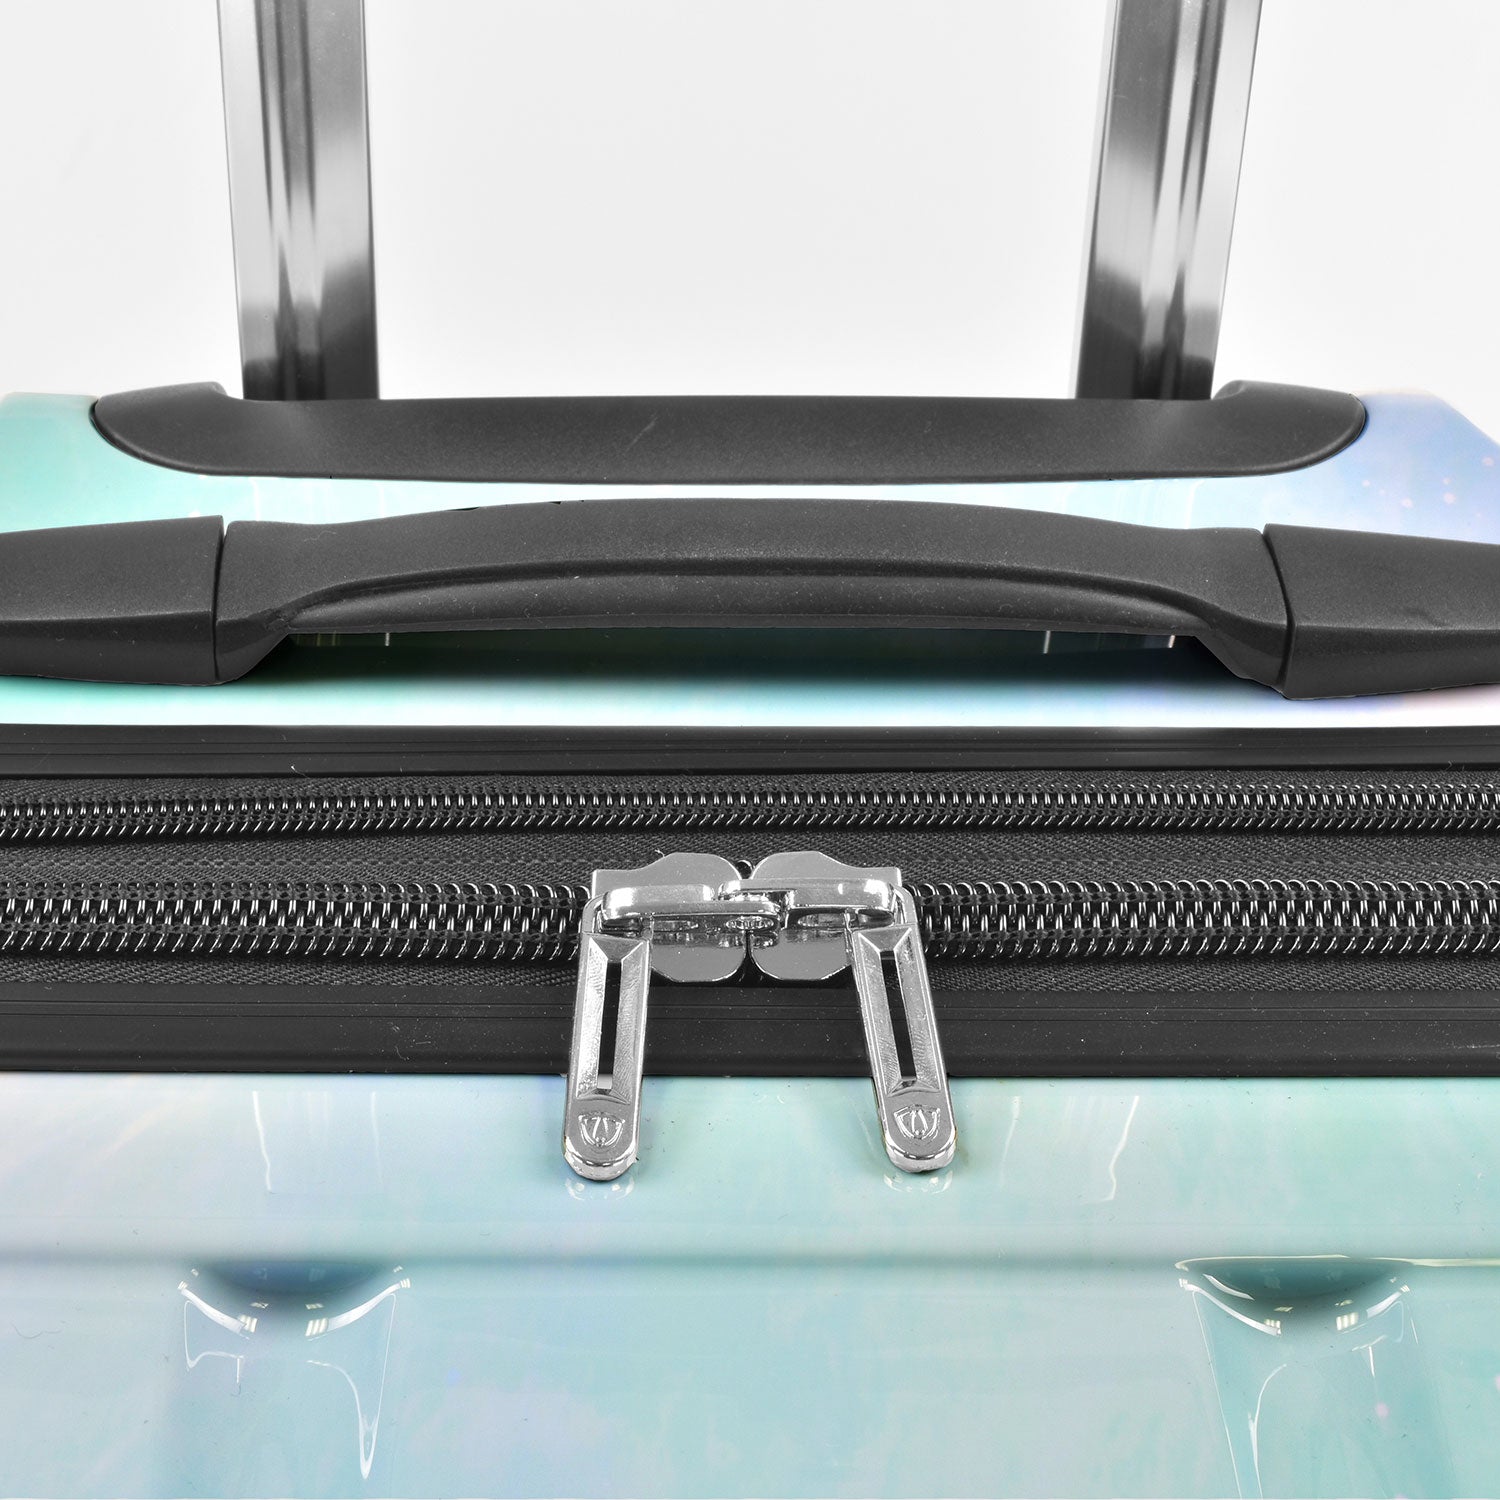 Ruma II 2-Piece Hardside Spinner Luggage Set